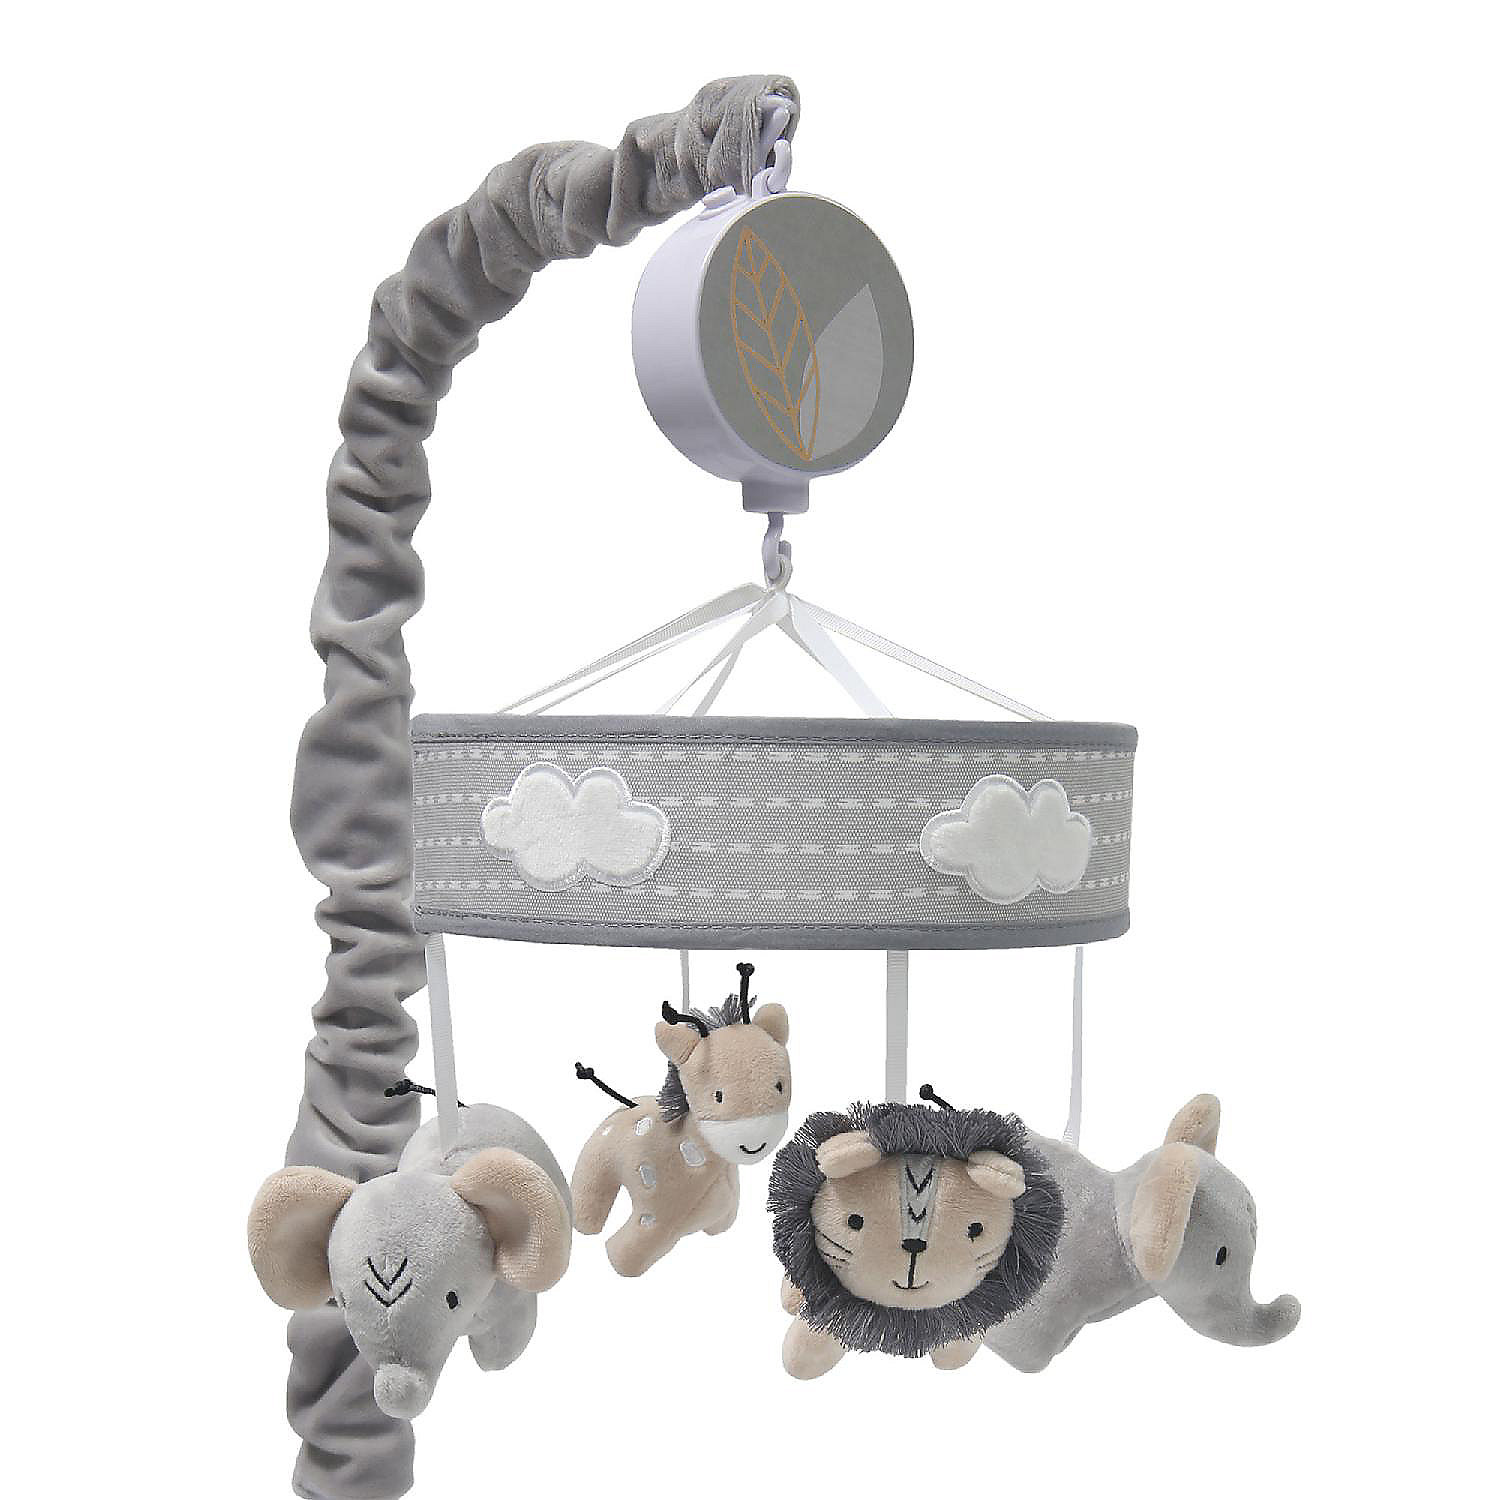 Lambs & Ivy Jungle Safari Musical Baby Crib Mobile - Gray, Beige, White,  Animals | Oriental Trading